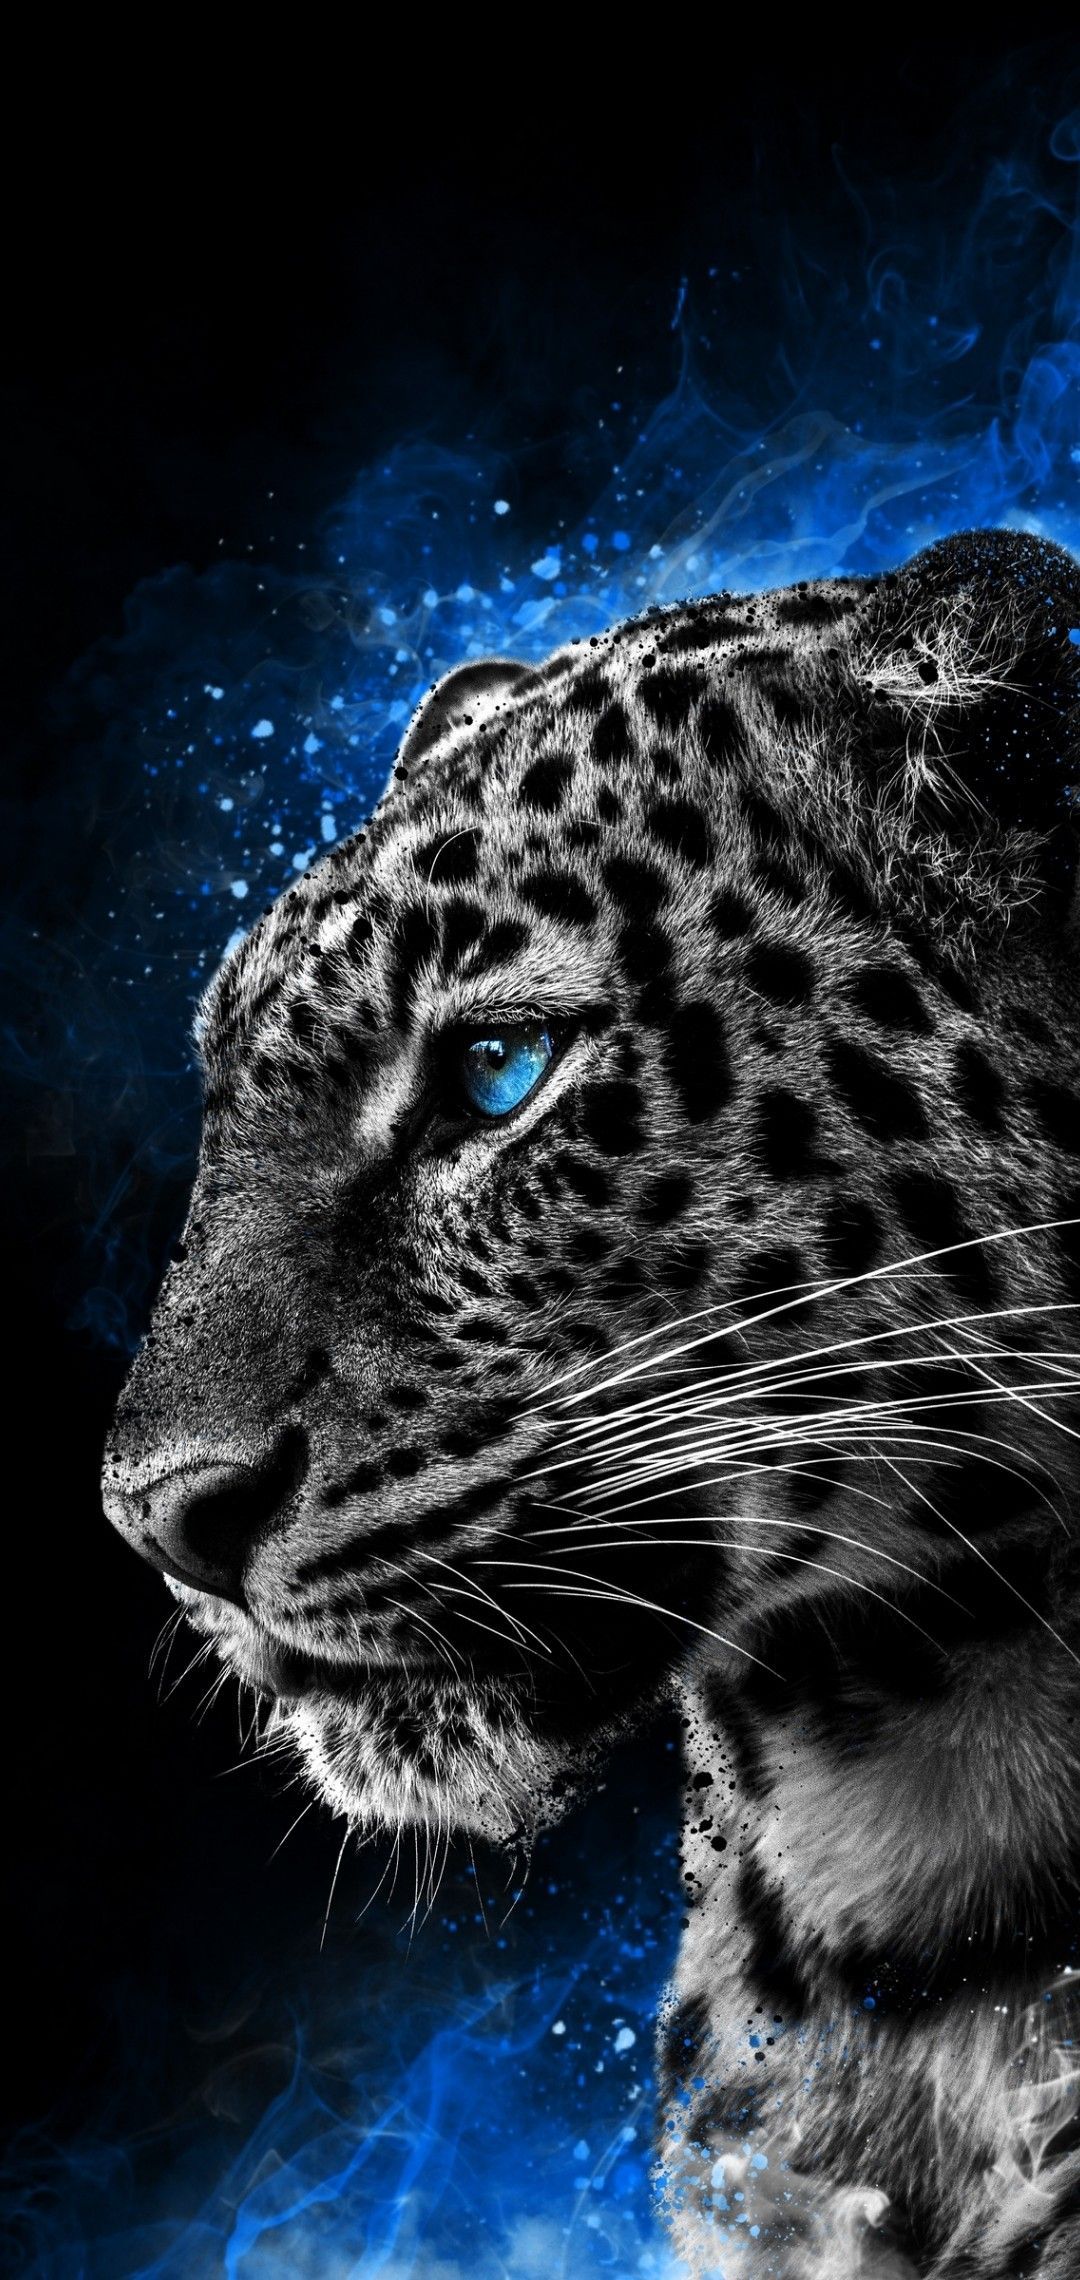 Animated Tiger wallpaper. Cheetah .com